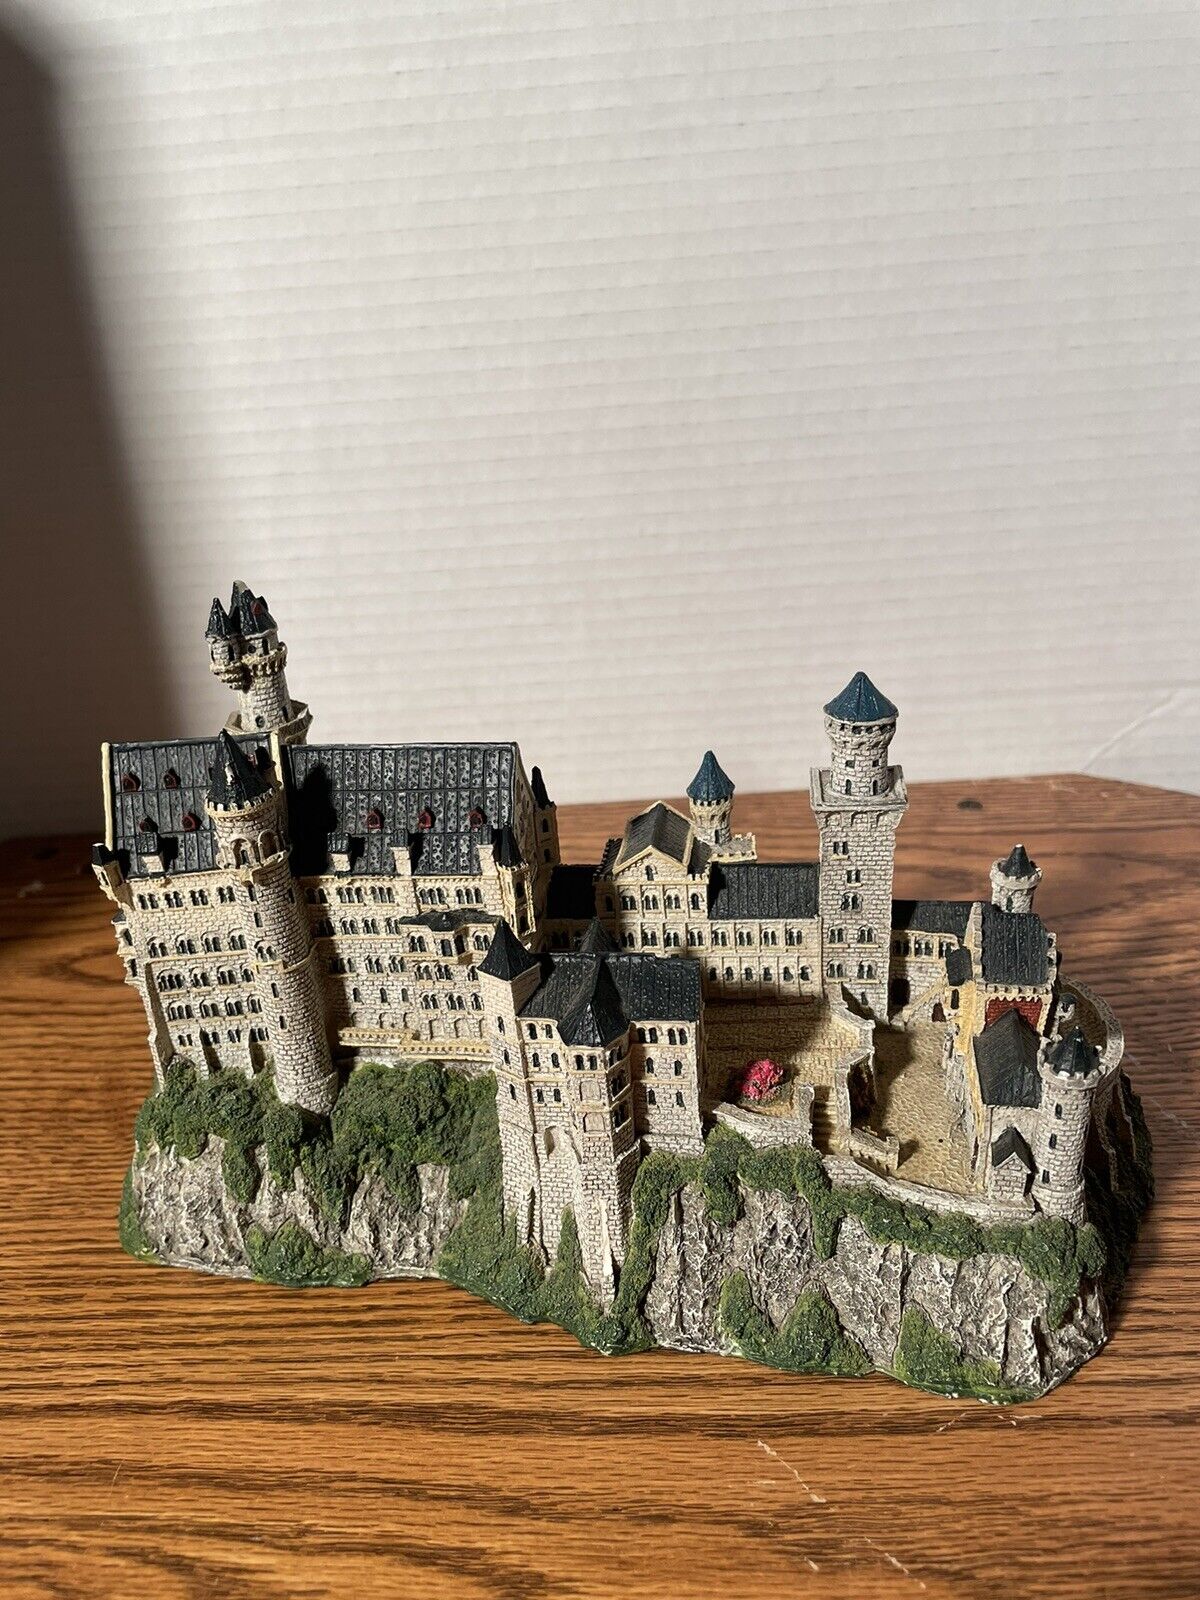 1993 Enchanted Castles of Europe NEUSCHWANSTEIN CASTLE Sculpture By Danbury Mint